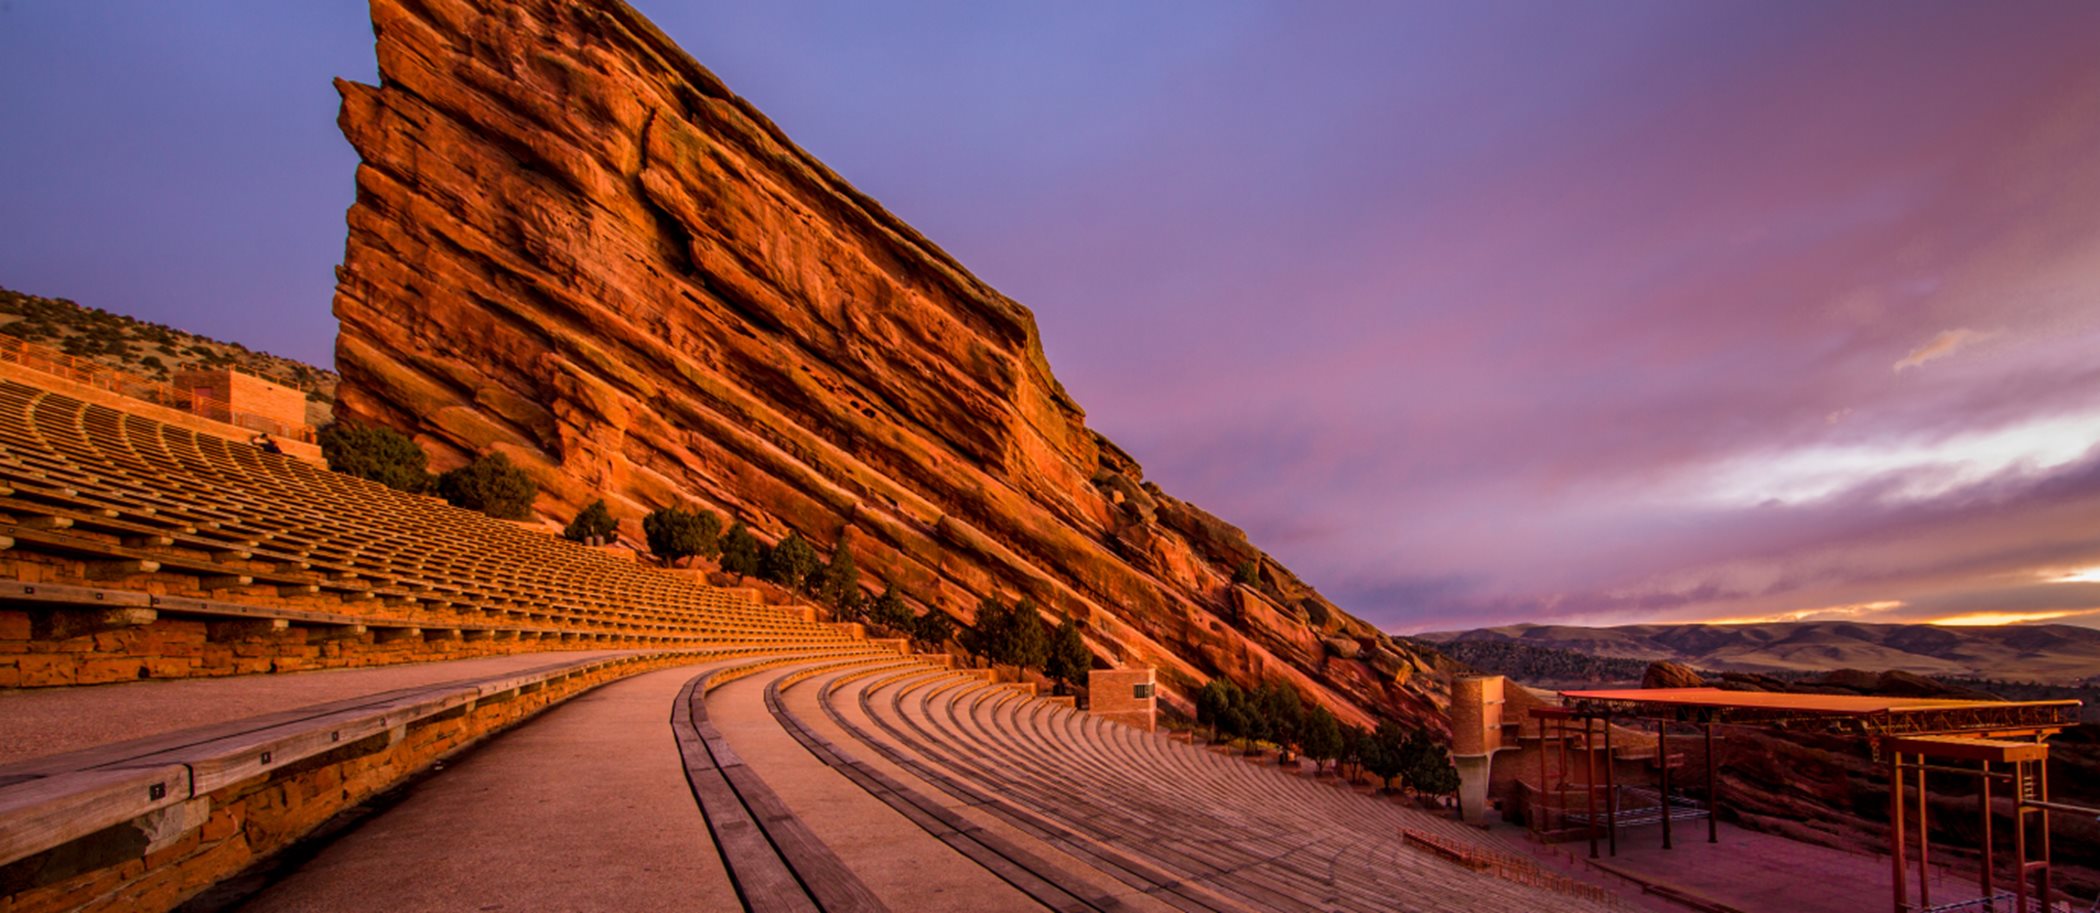 Red Rocks Amphitheater, outdoor venue